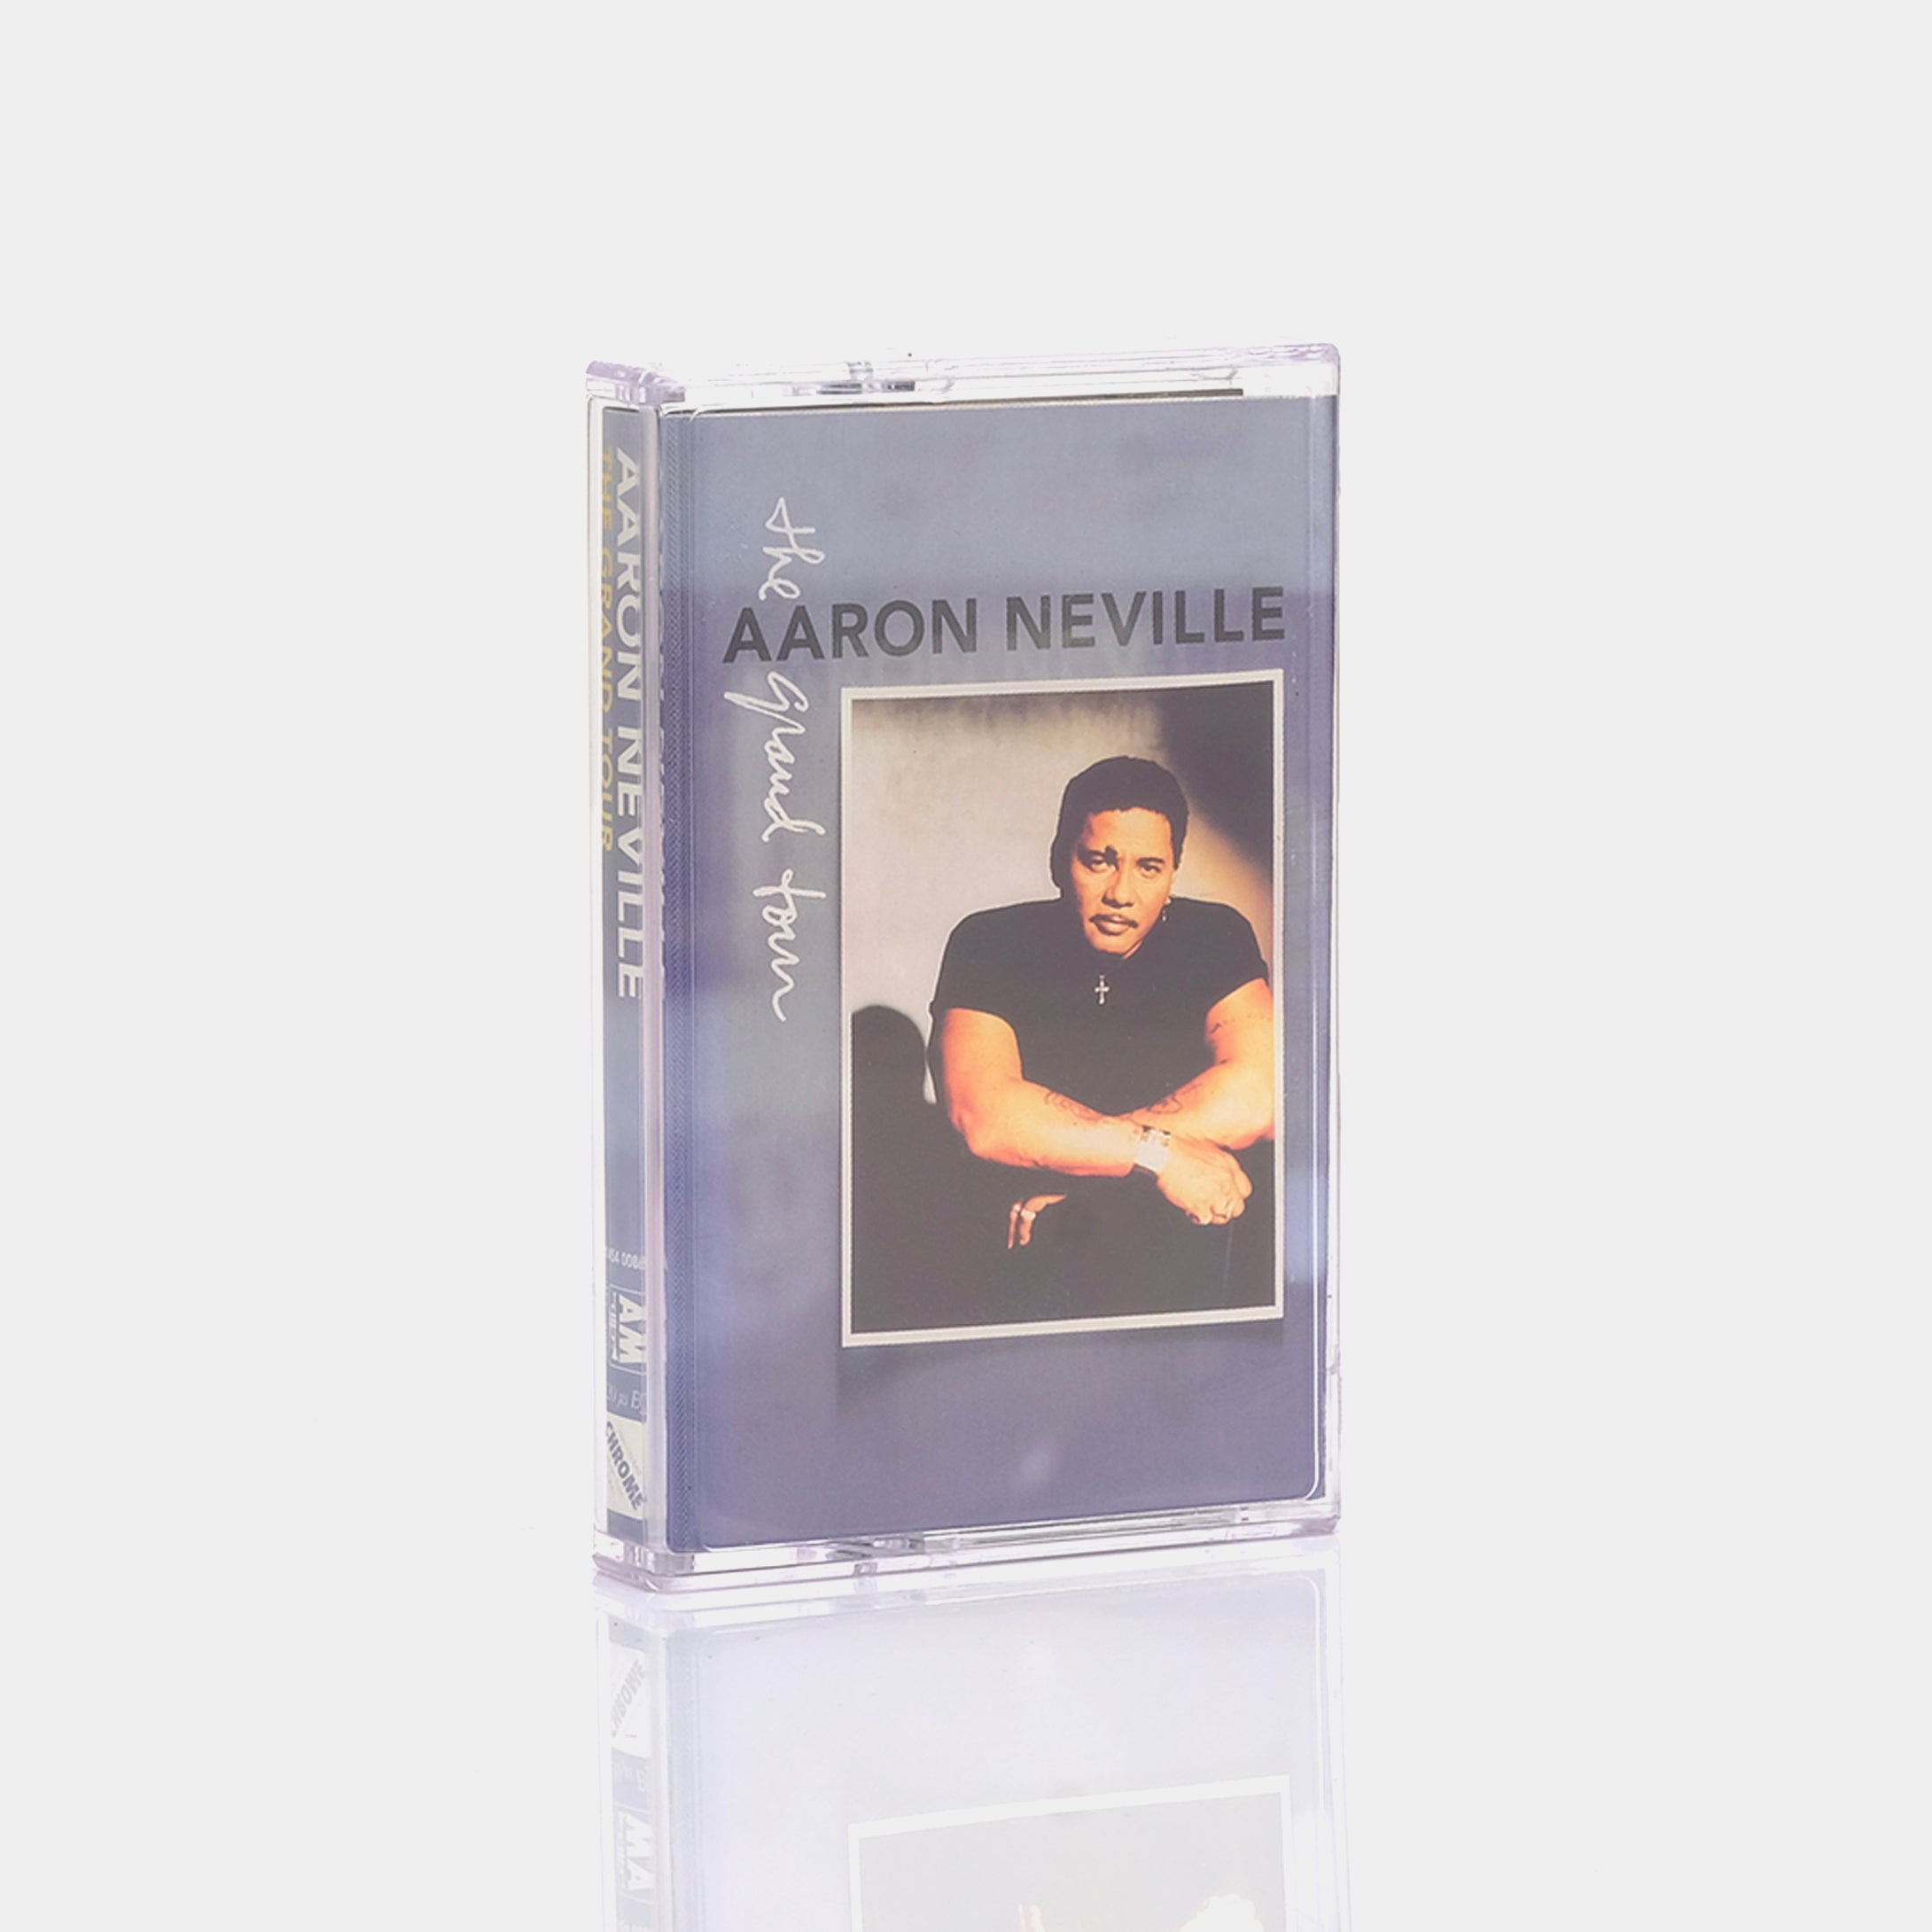 Aaron Neville - The Grand Tour Cassette Tape